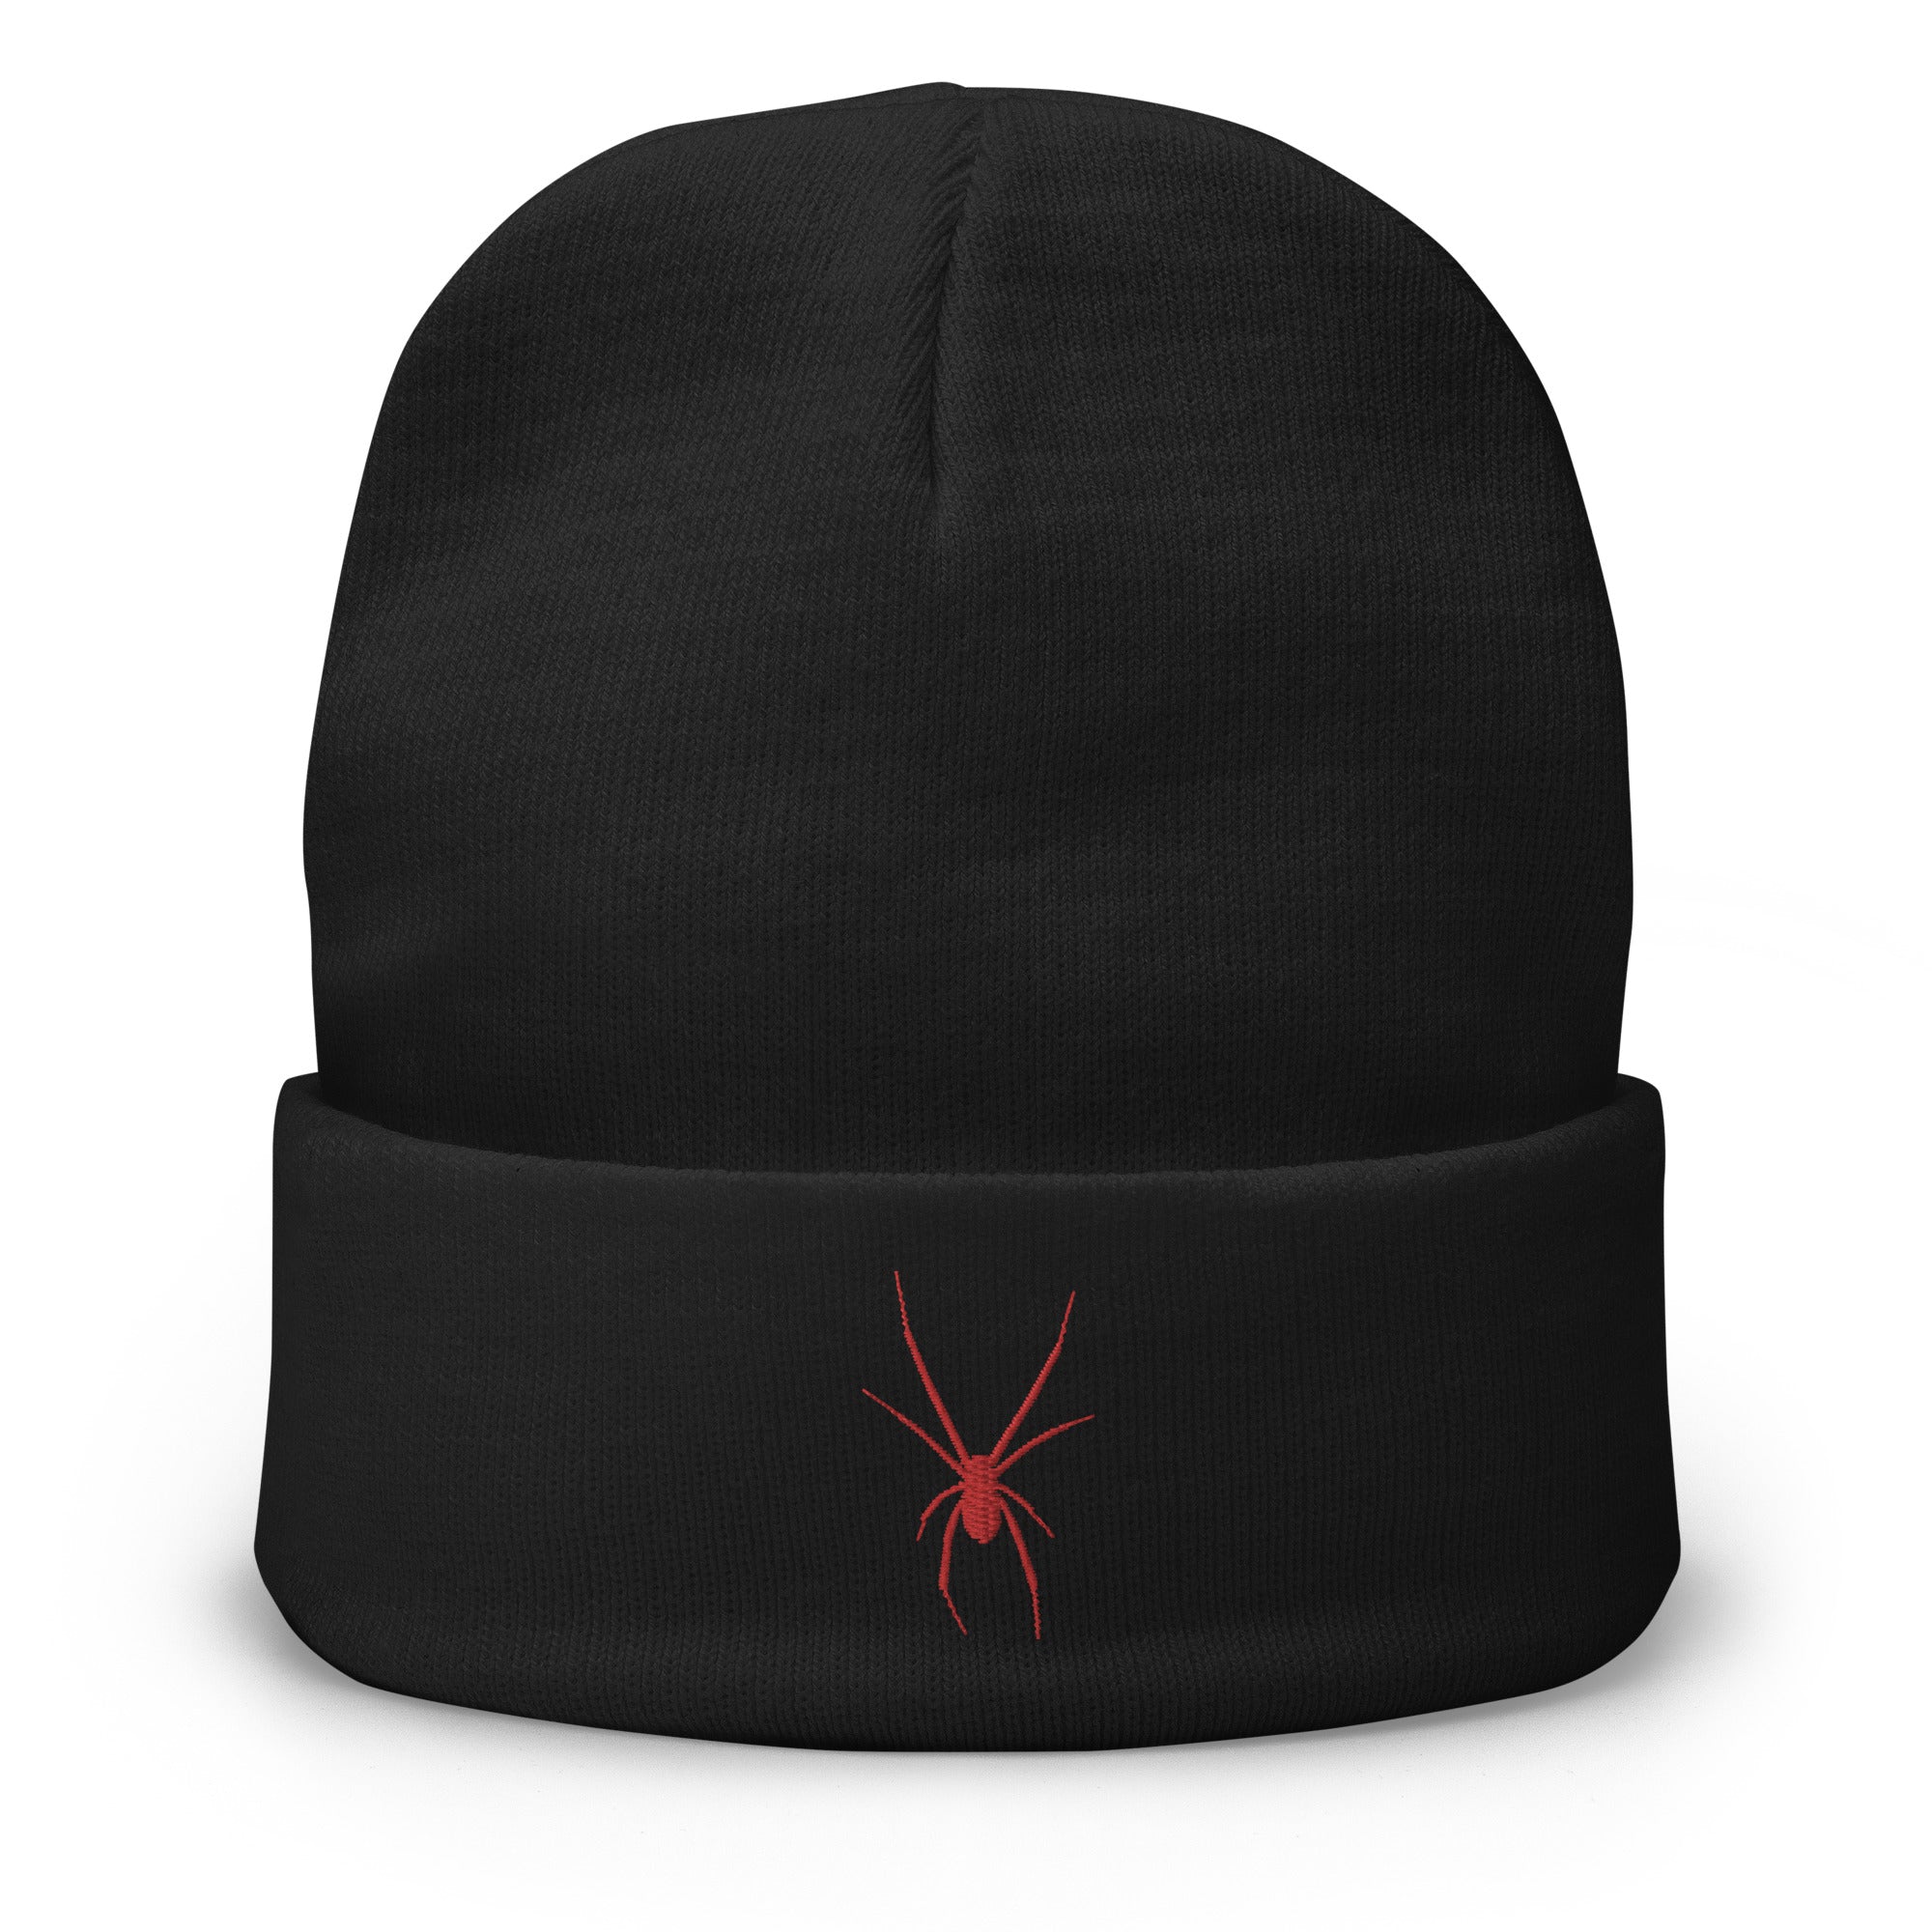 Arachnid Creepy Black Widow Spider Embroidered Cuff Beanie Red Thread - Edge of Life Designs